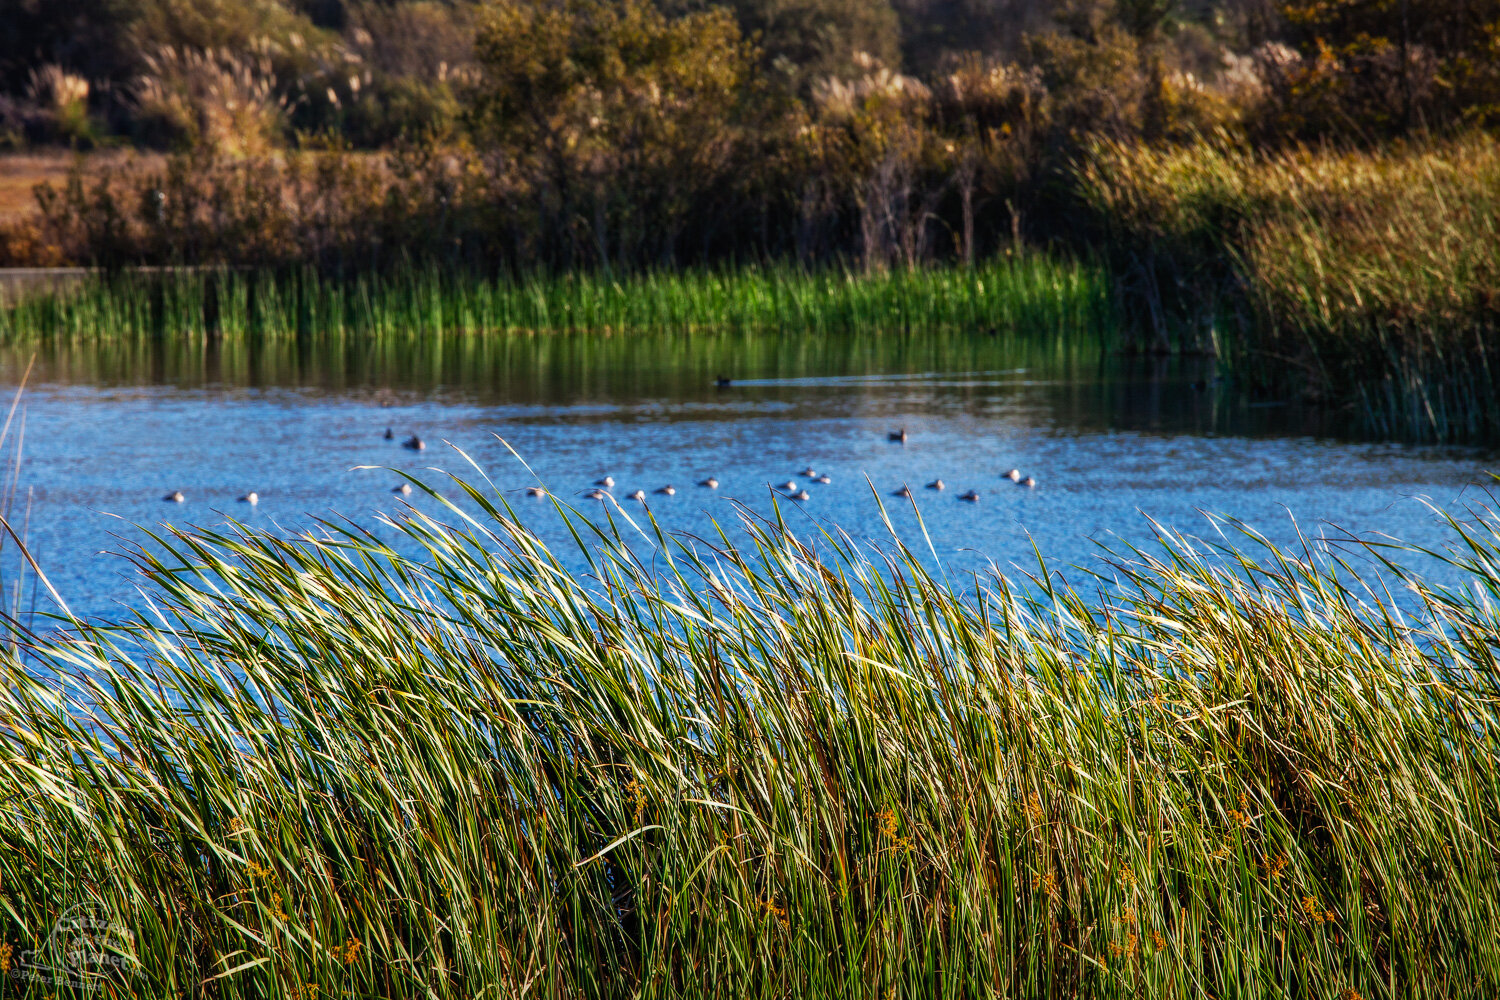  Tall Marsh grass guards the Freshwater Marsh. 